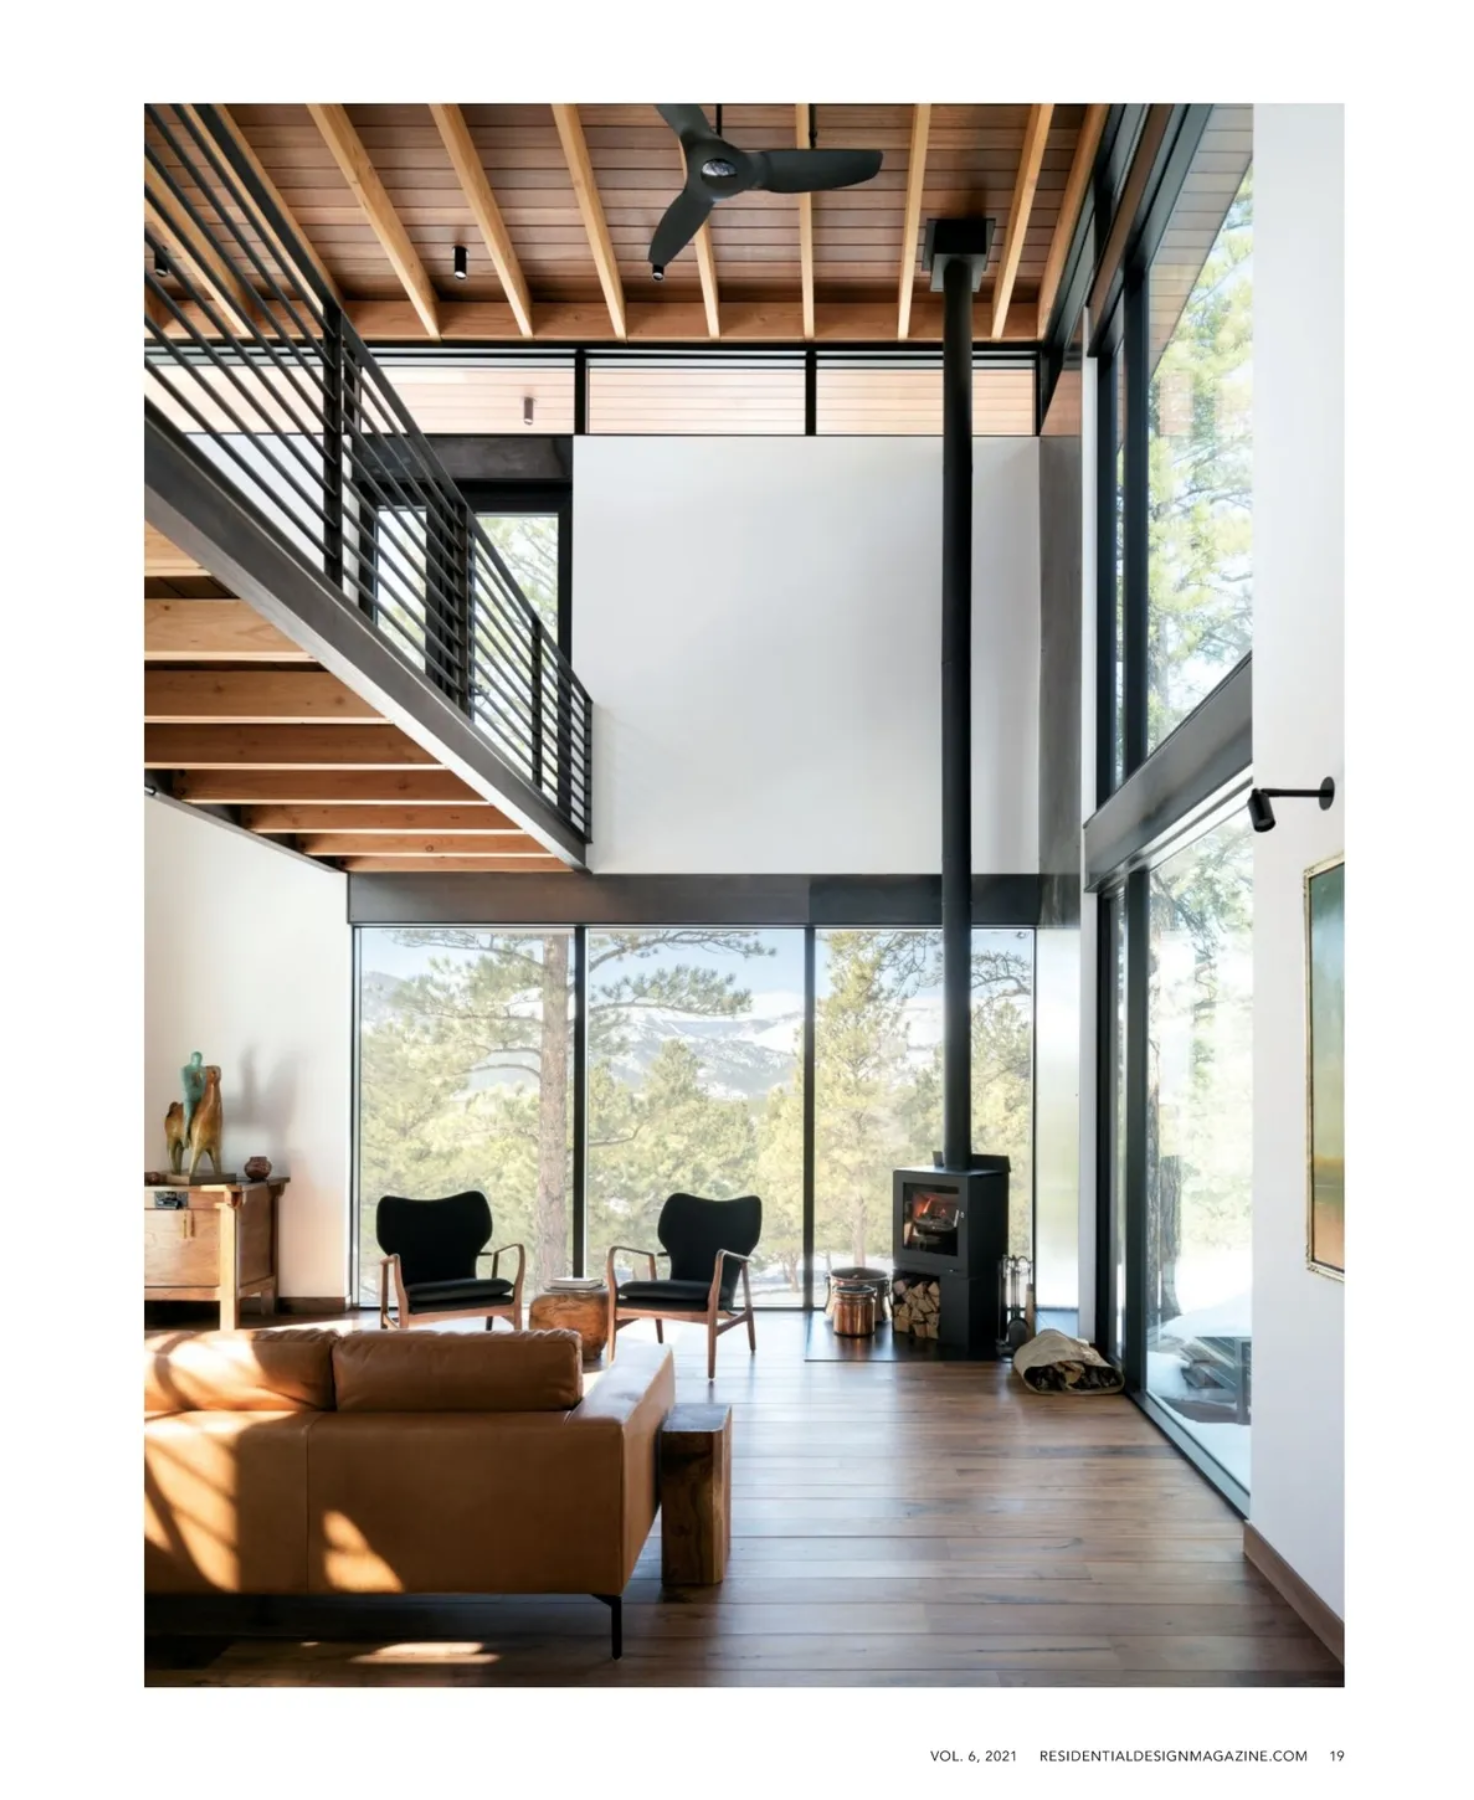 Residential Design Goatbarn | Press for Renée del Gaudio Architecture.